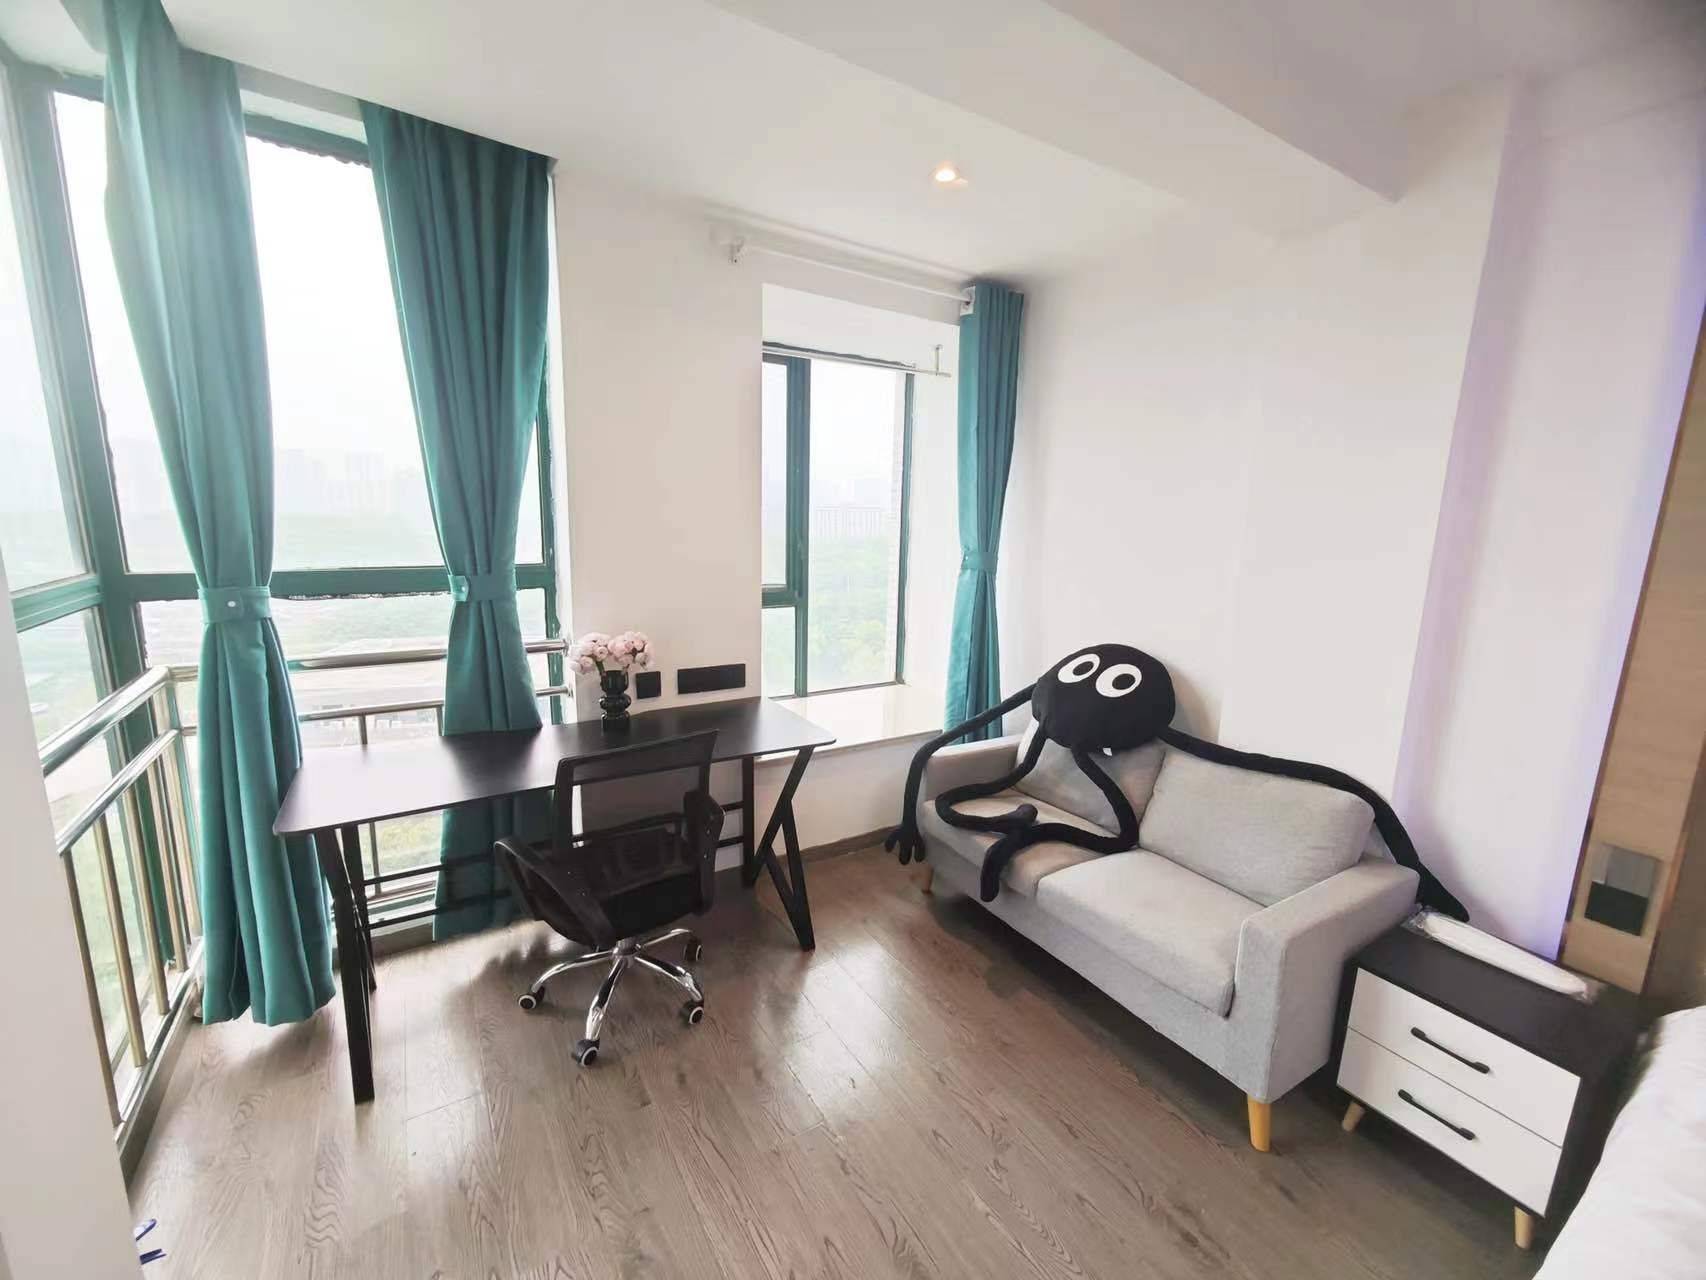 Nanjing-Yuhuatai-Cozy Home,Clean&Comfy,No Gender Limit